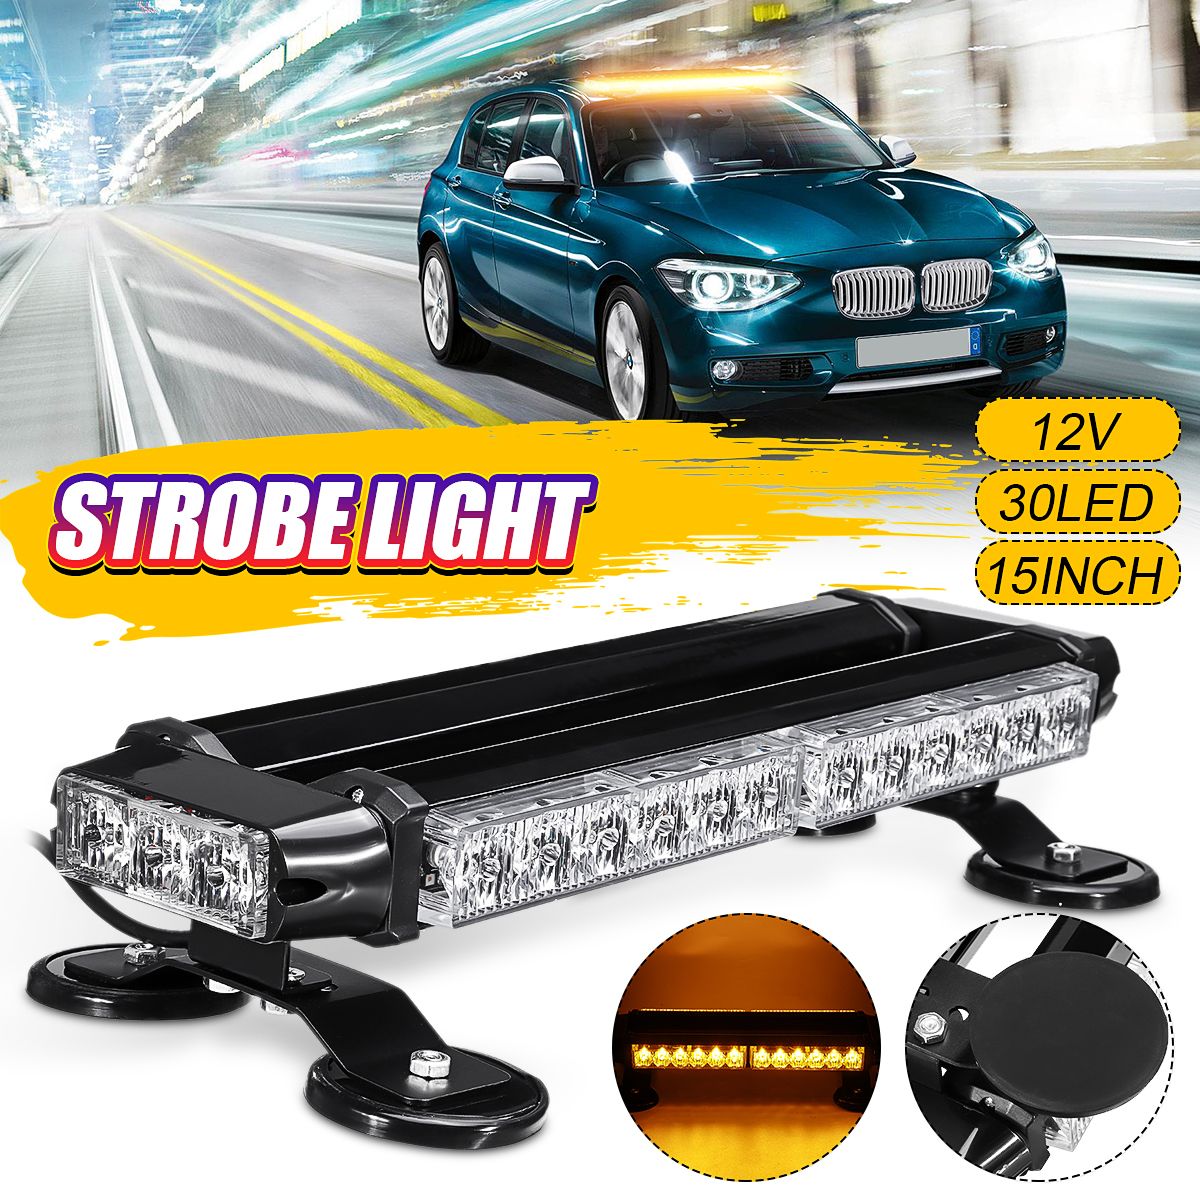 12V-30W-Car-LED-Roof-Strobe-Light-Bar-Emergency-Signal-Warning-Flash-Amber-Magnetic-7-Modes-Universa-1587030